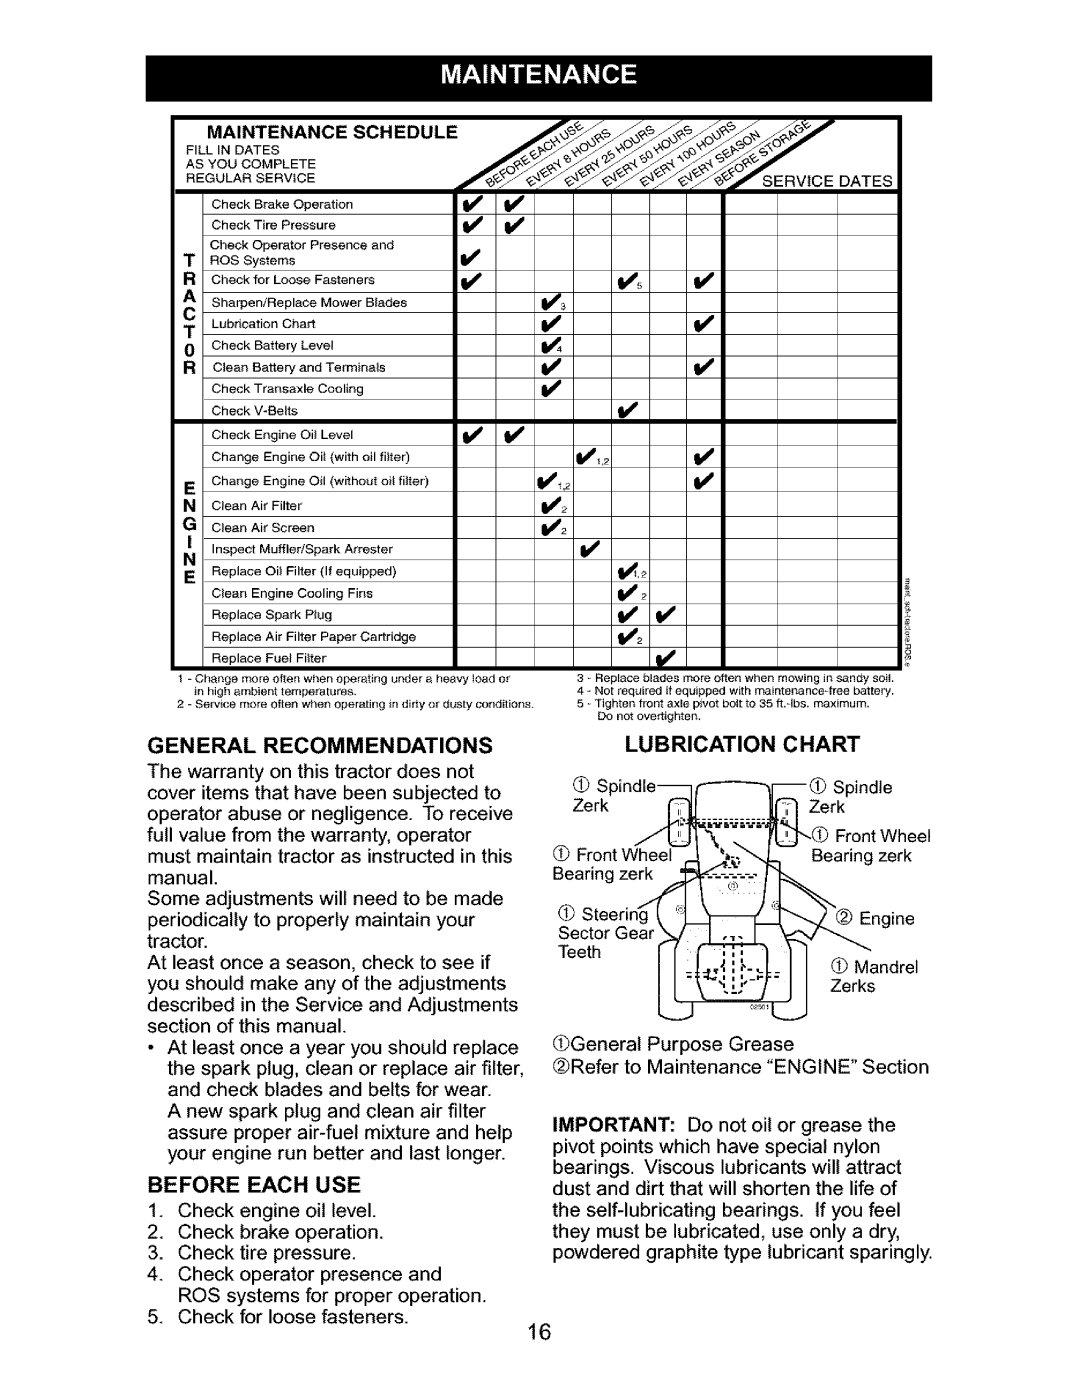 Craftsman 917.27632 owner manual Ervoedates, Lubrication, Chart 